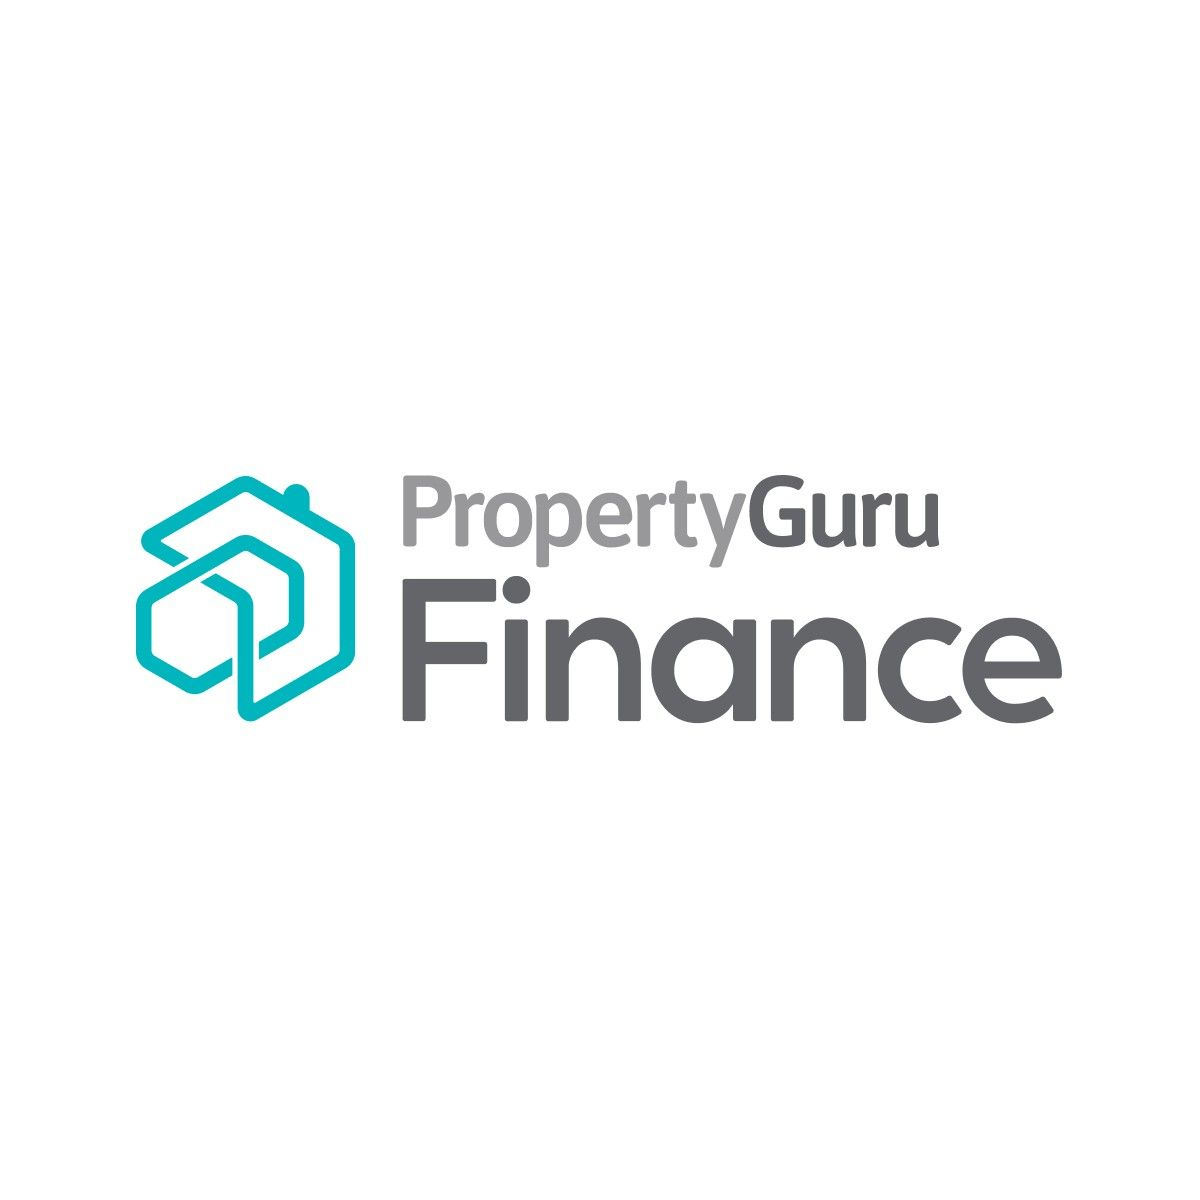 PropertyGuru_Finance